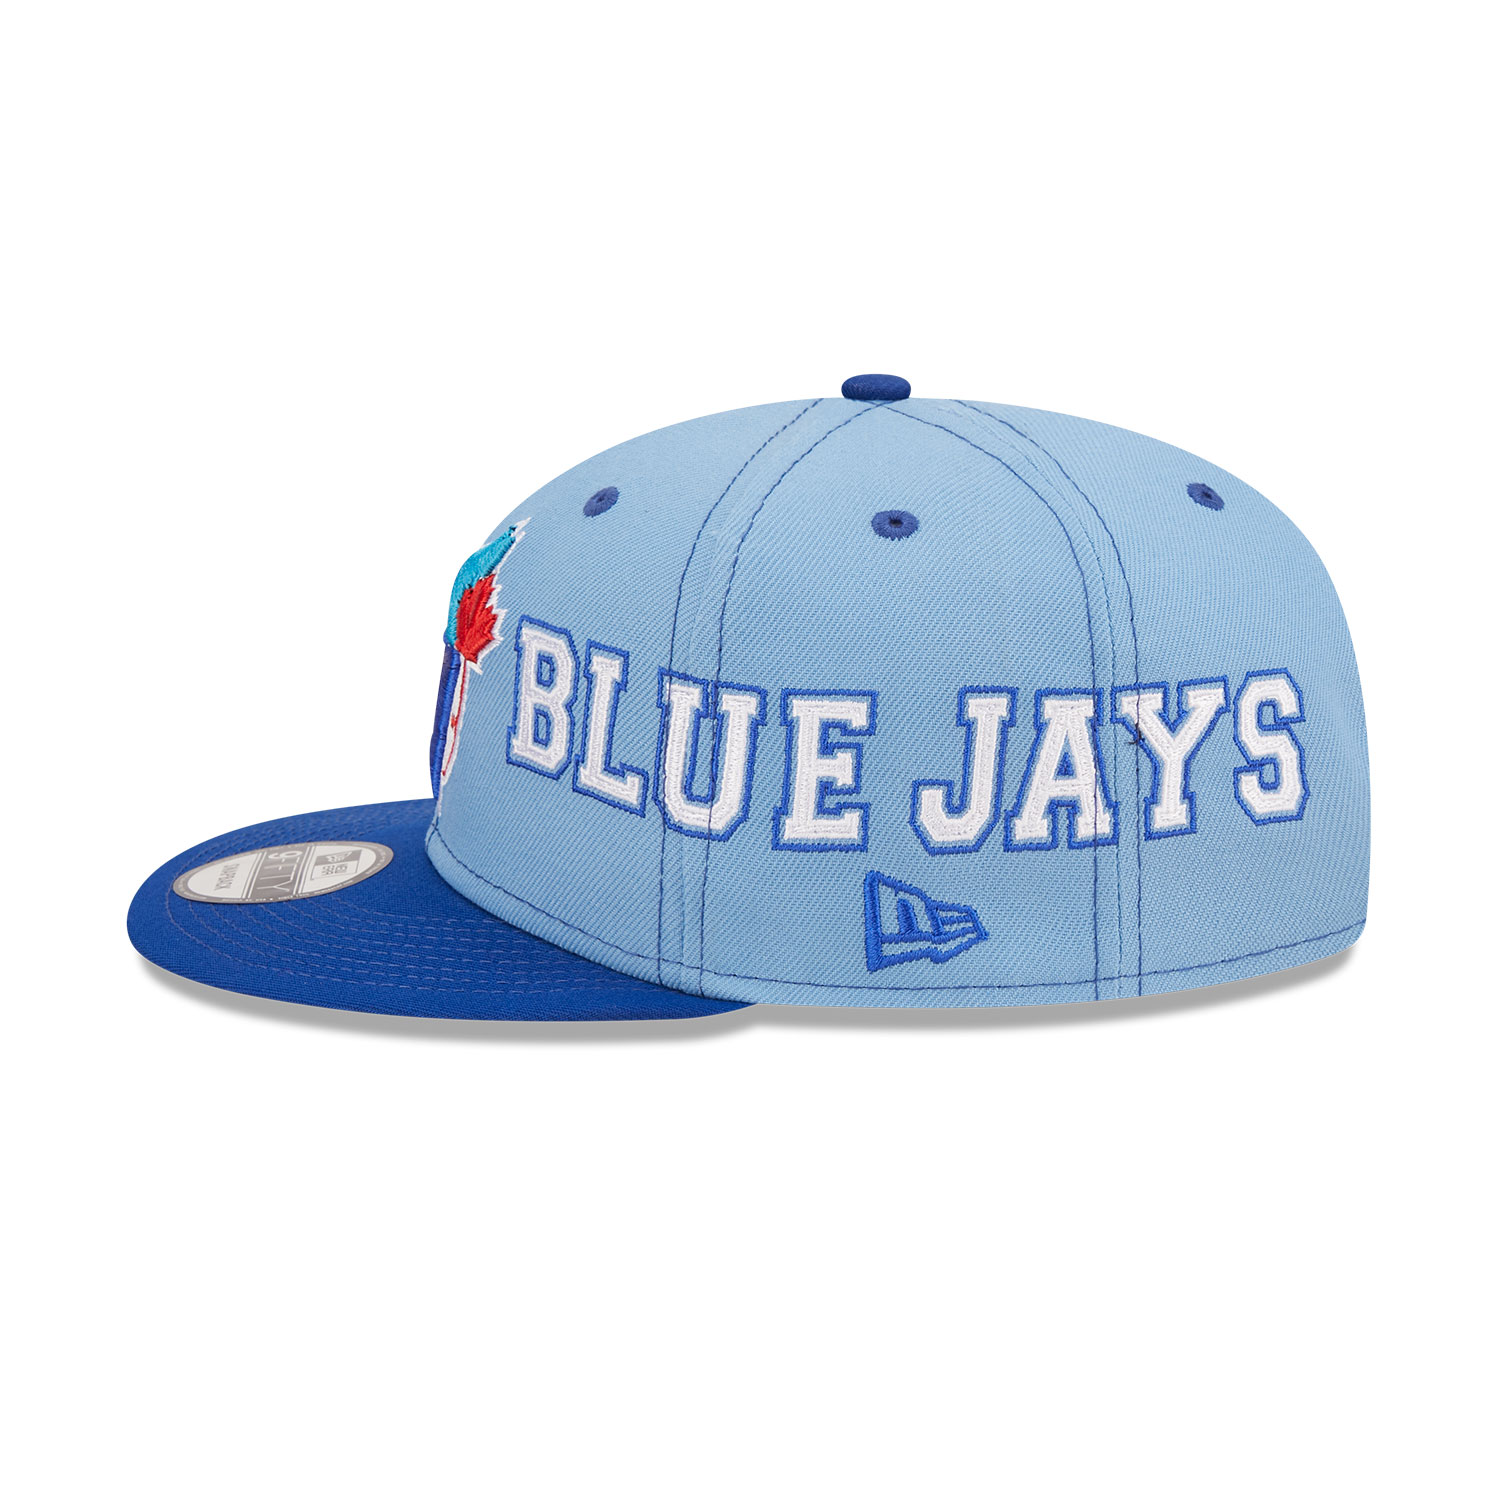 Toronto Blue Jays Teamsplit Blue 9FIFTY Snapback Cap